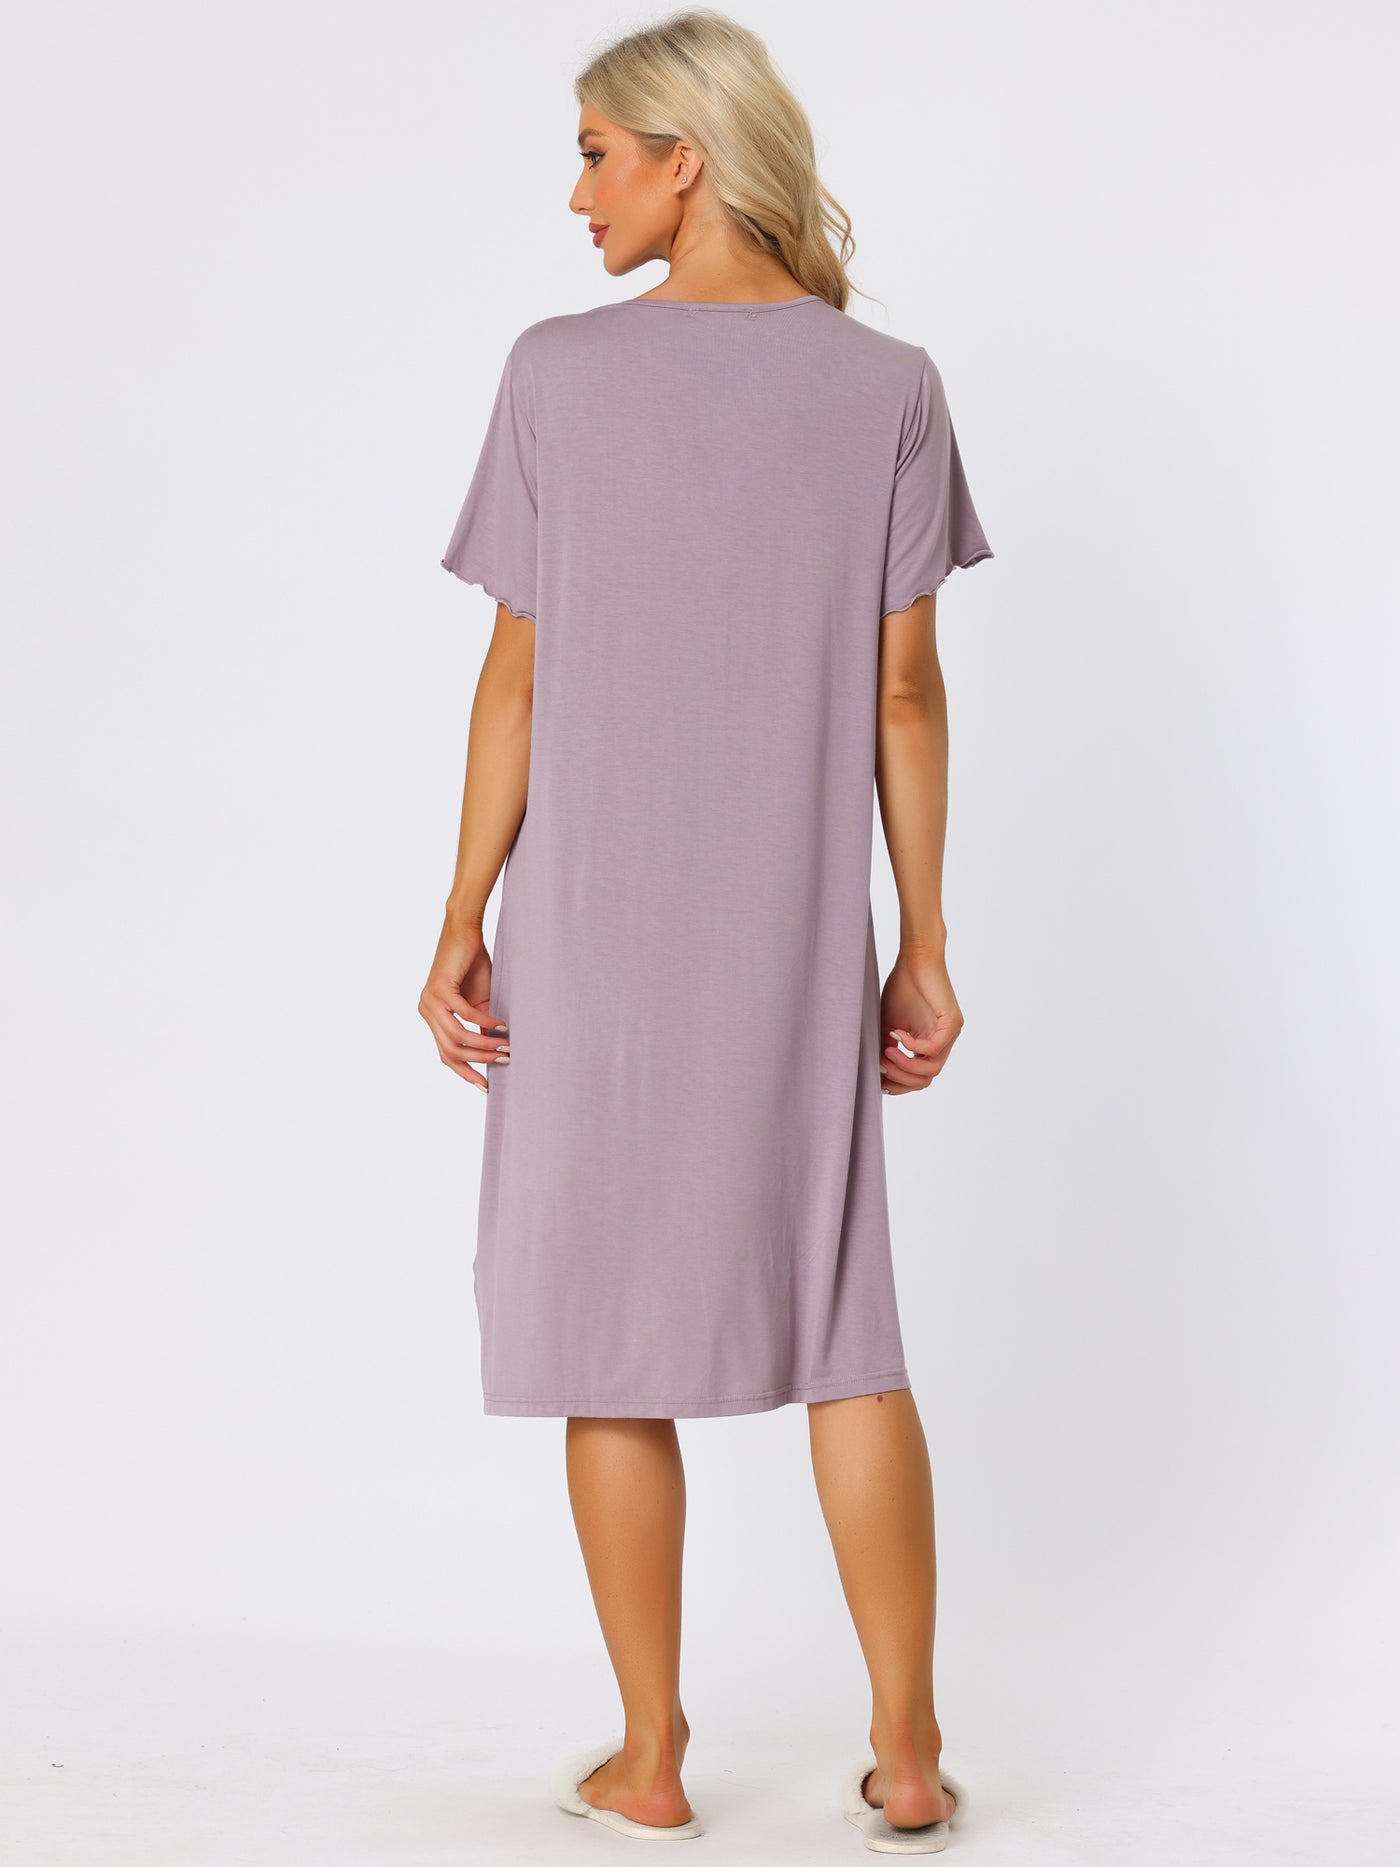 Bublédon Womens Short Sleeve Nightshirt Button Down Nightgown Sleepwear Pajama Dress